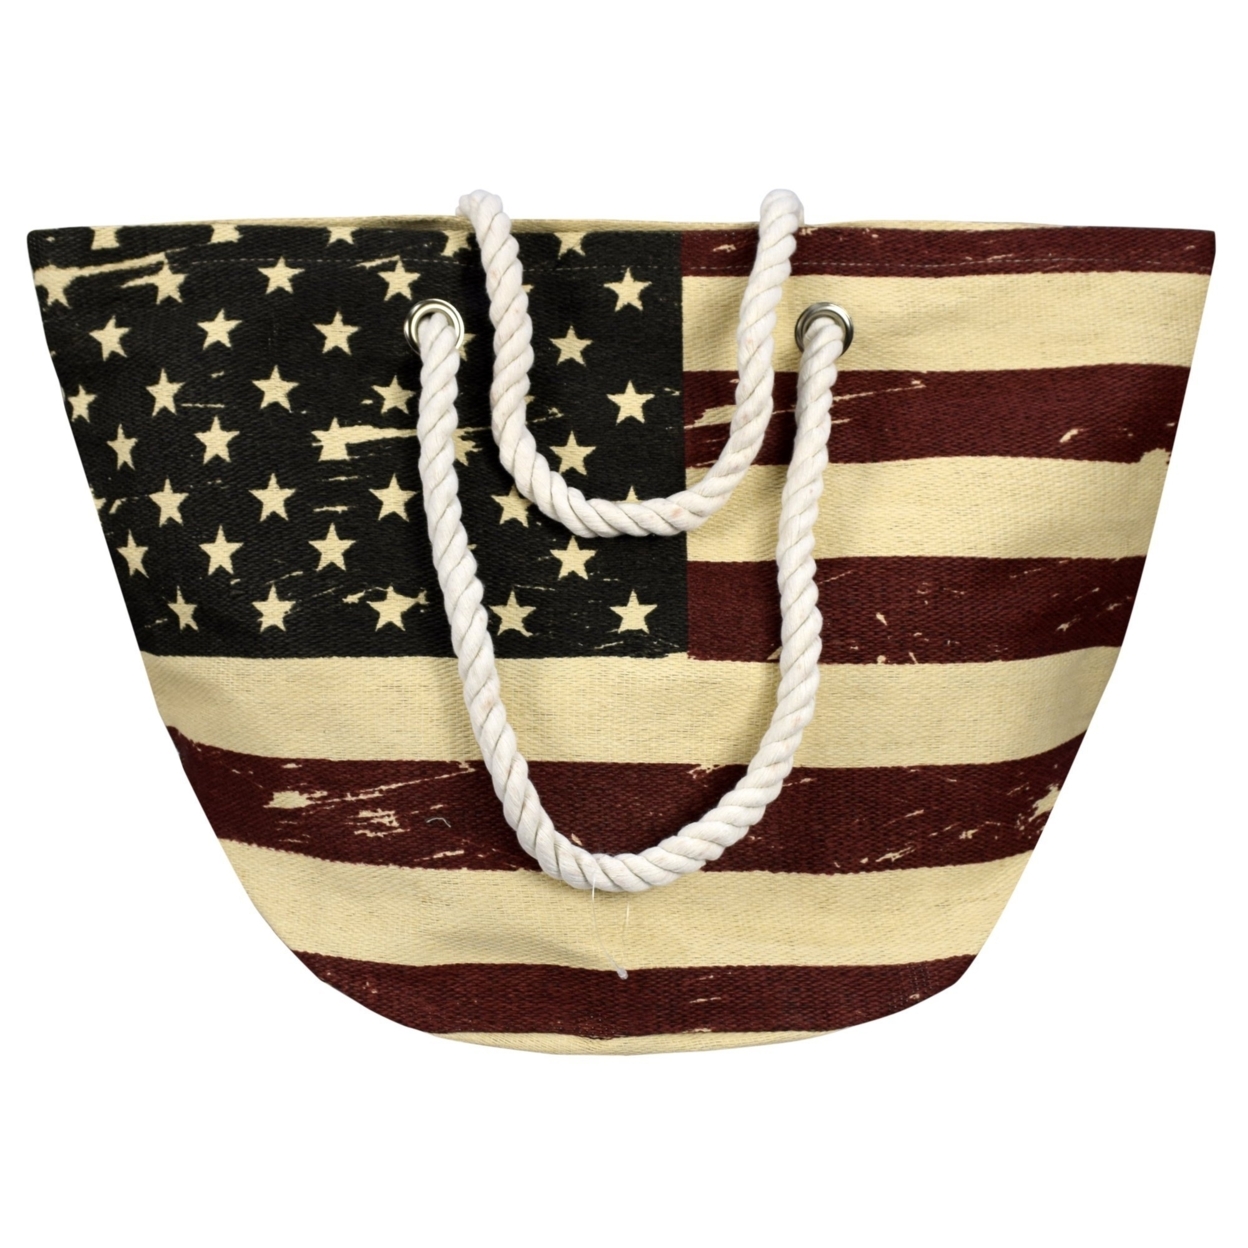 Women's All American Patriotic Flag Beach Summer Tote Travel Bag - image 1 of 5